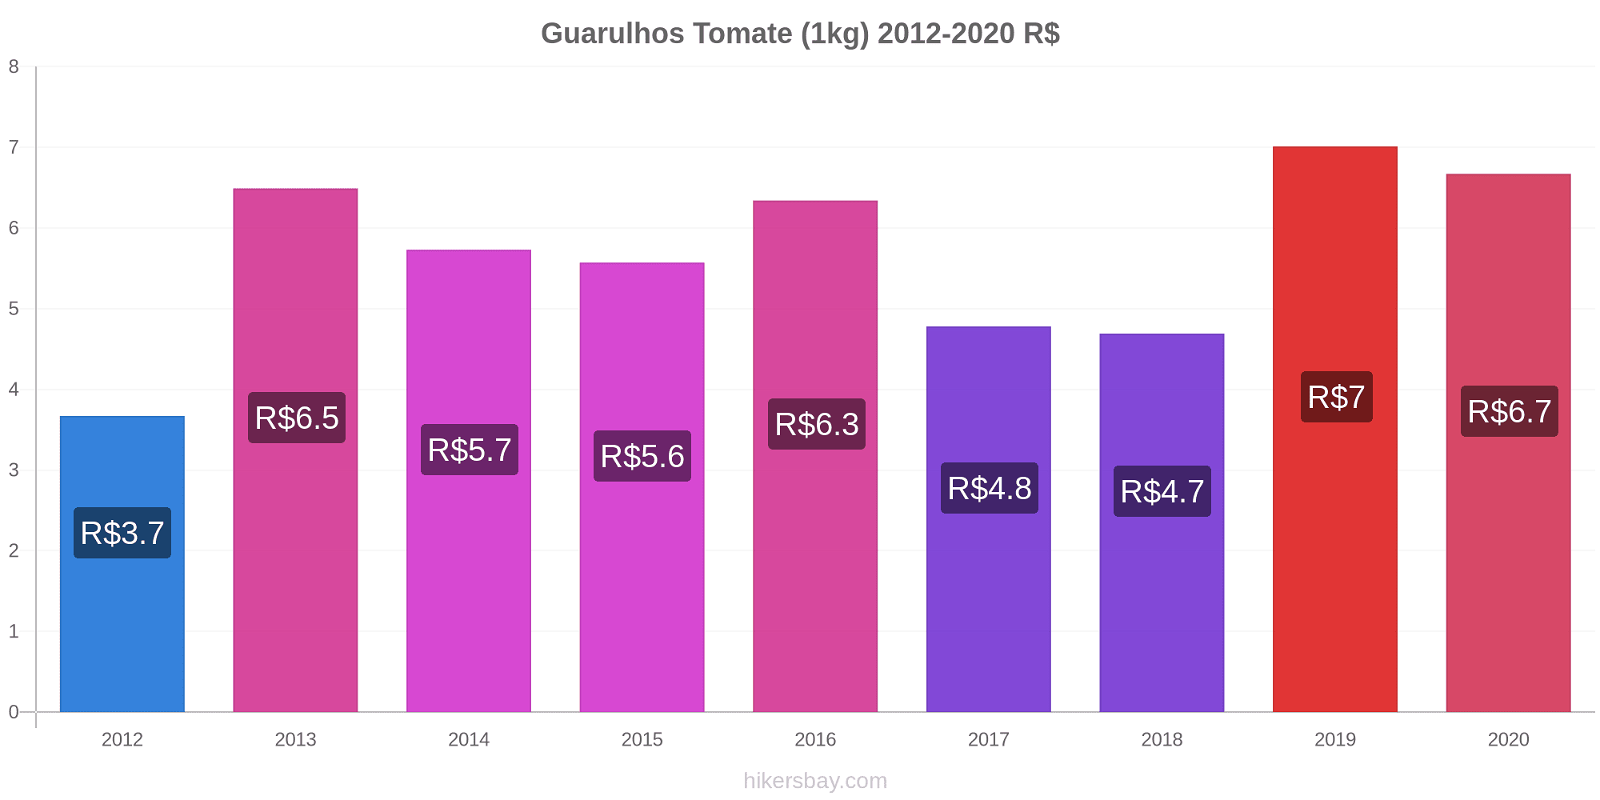 Guarulhos changements de prix Tomate (1kg) hikersbay.com